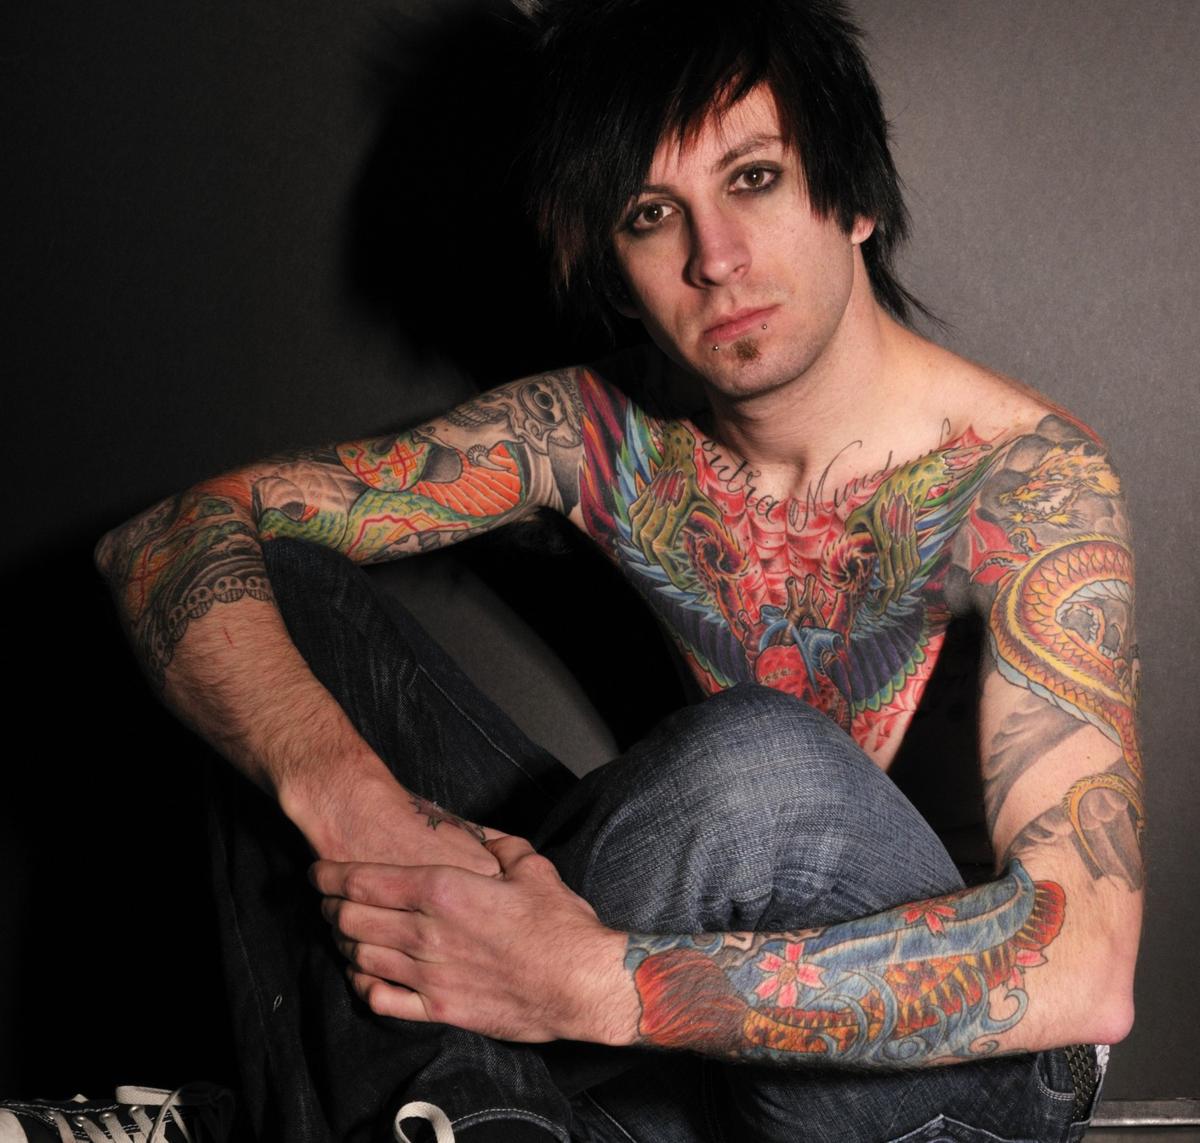 Punk Tattoos - Thoughtful Tattoos